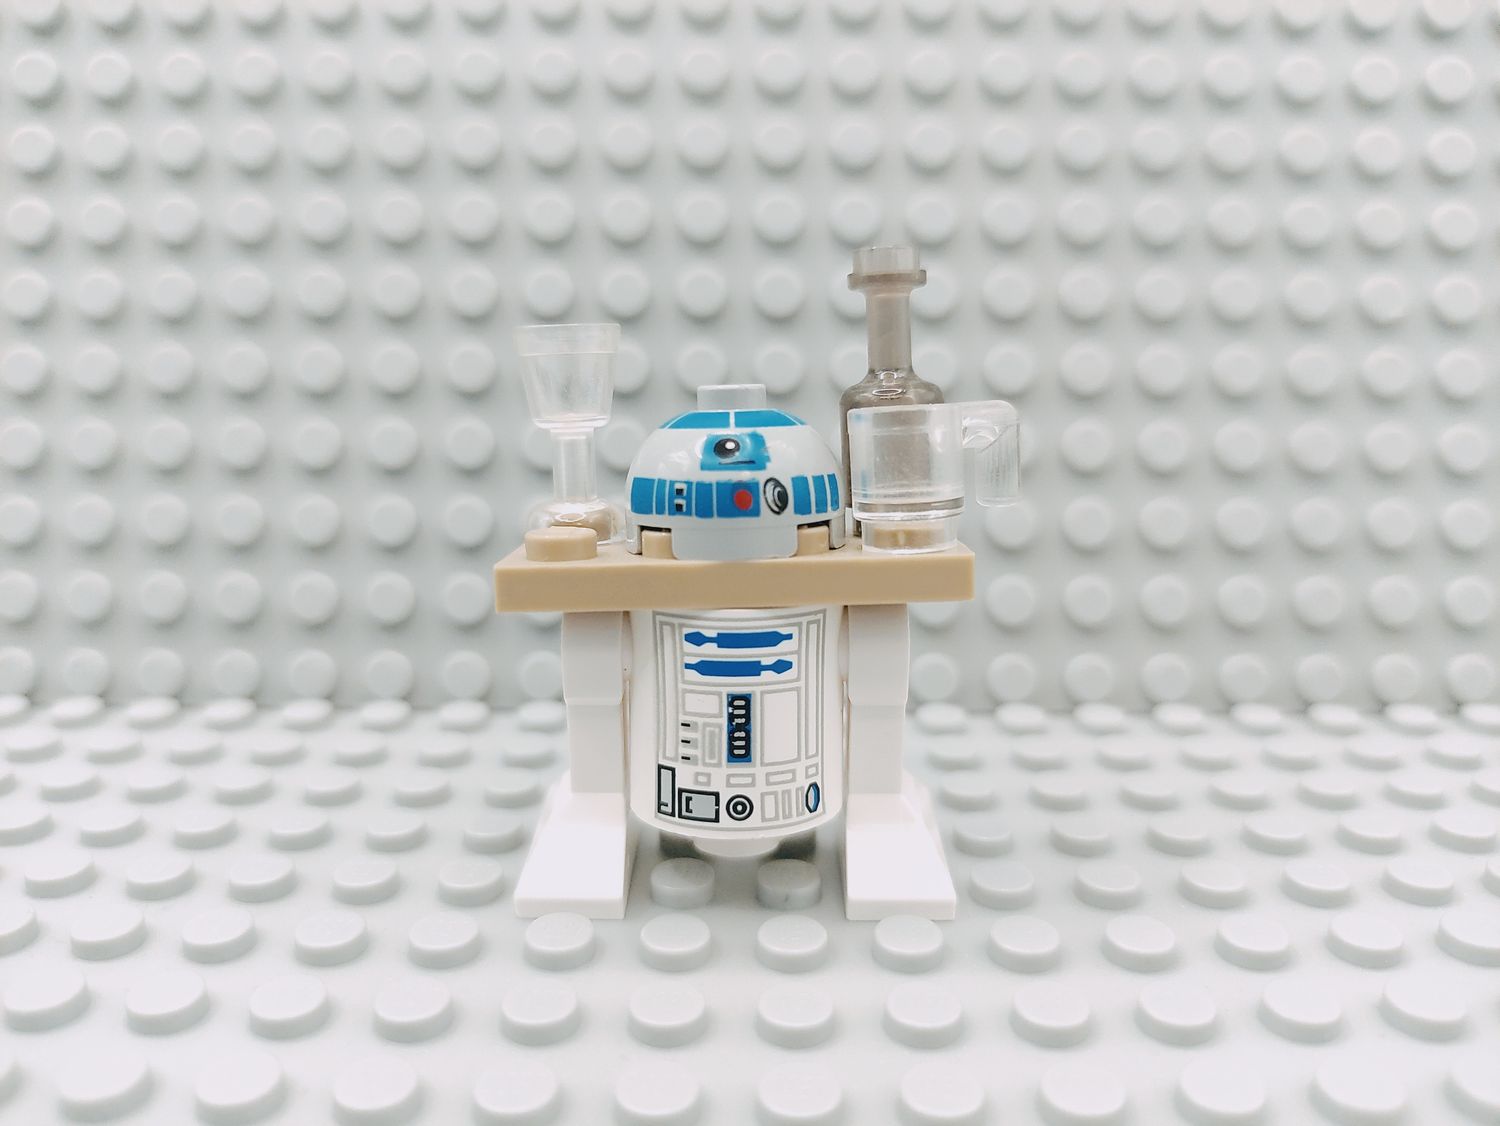 Lego Star Wars Minifigur R2-D2 Serving Tray